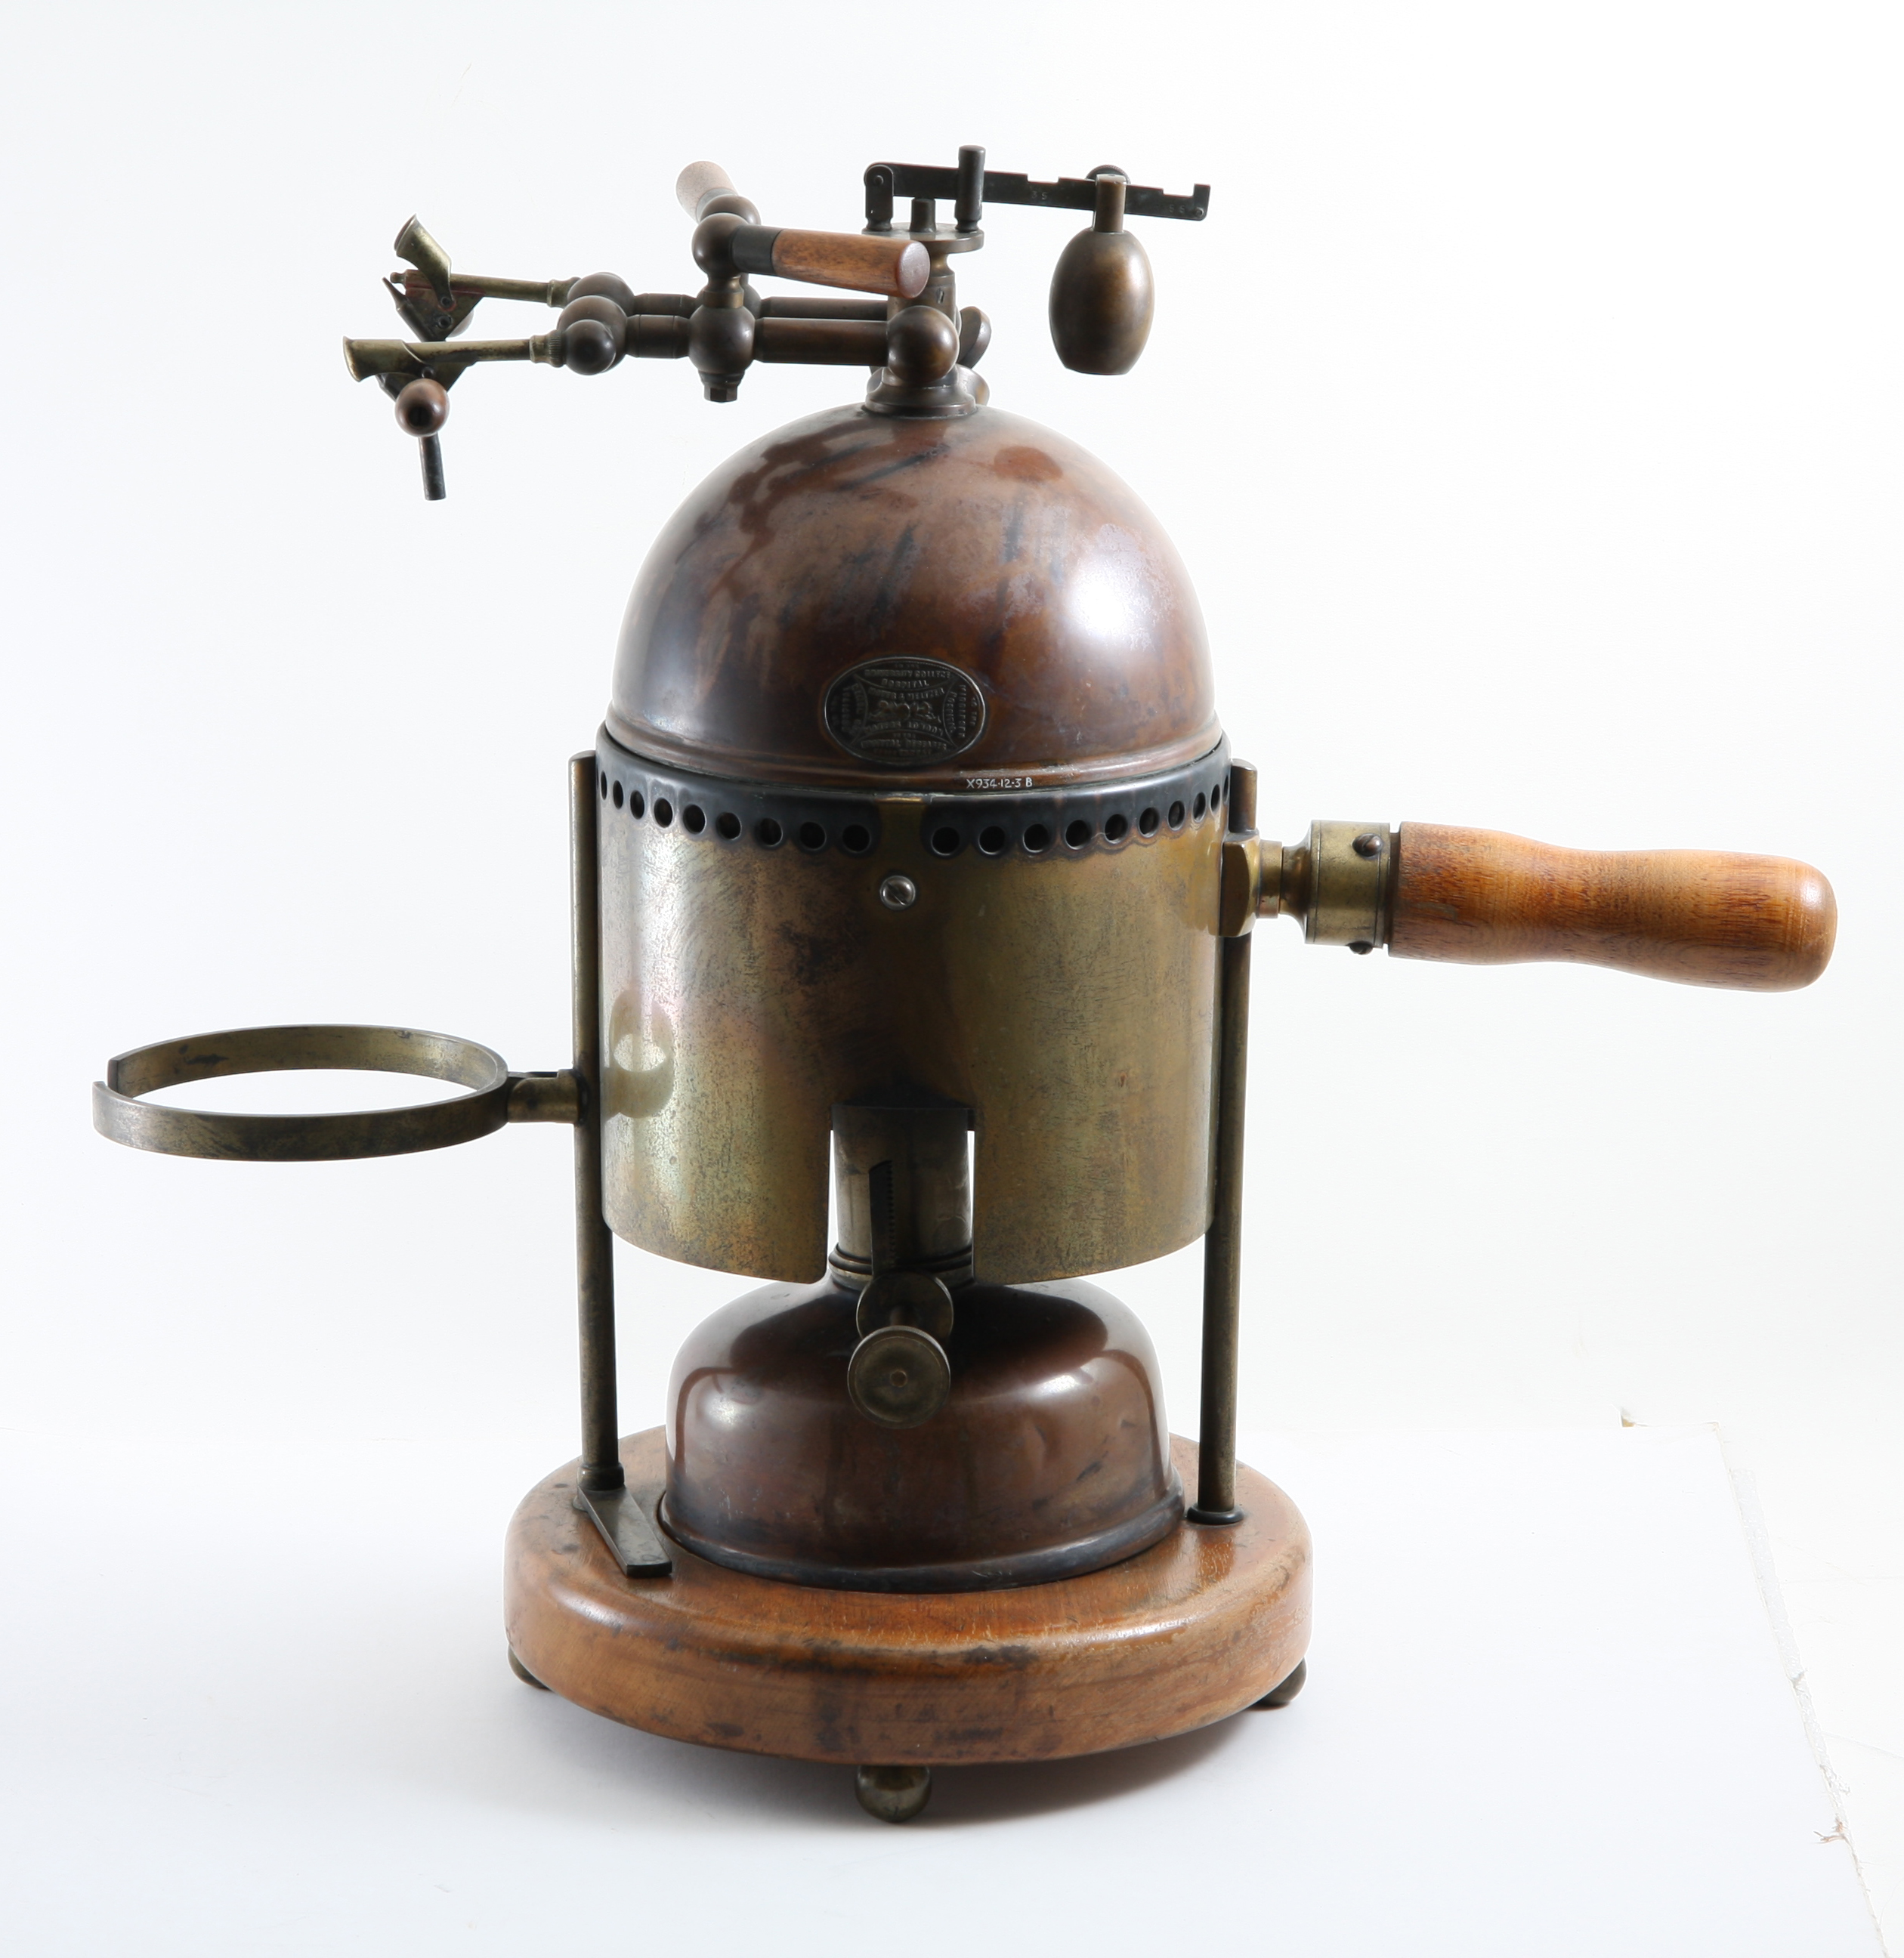 Carbolic Steam Sprayer (c.1870).  Museum of Health Care #1934.12.3